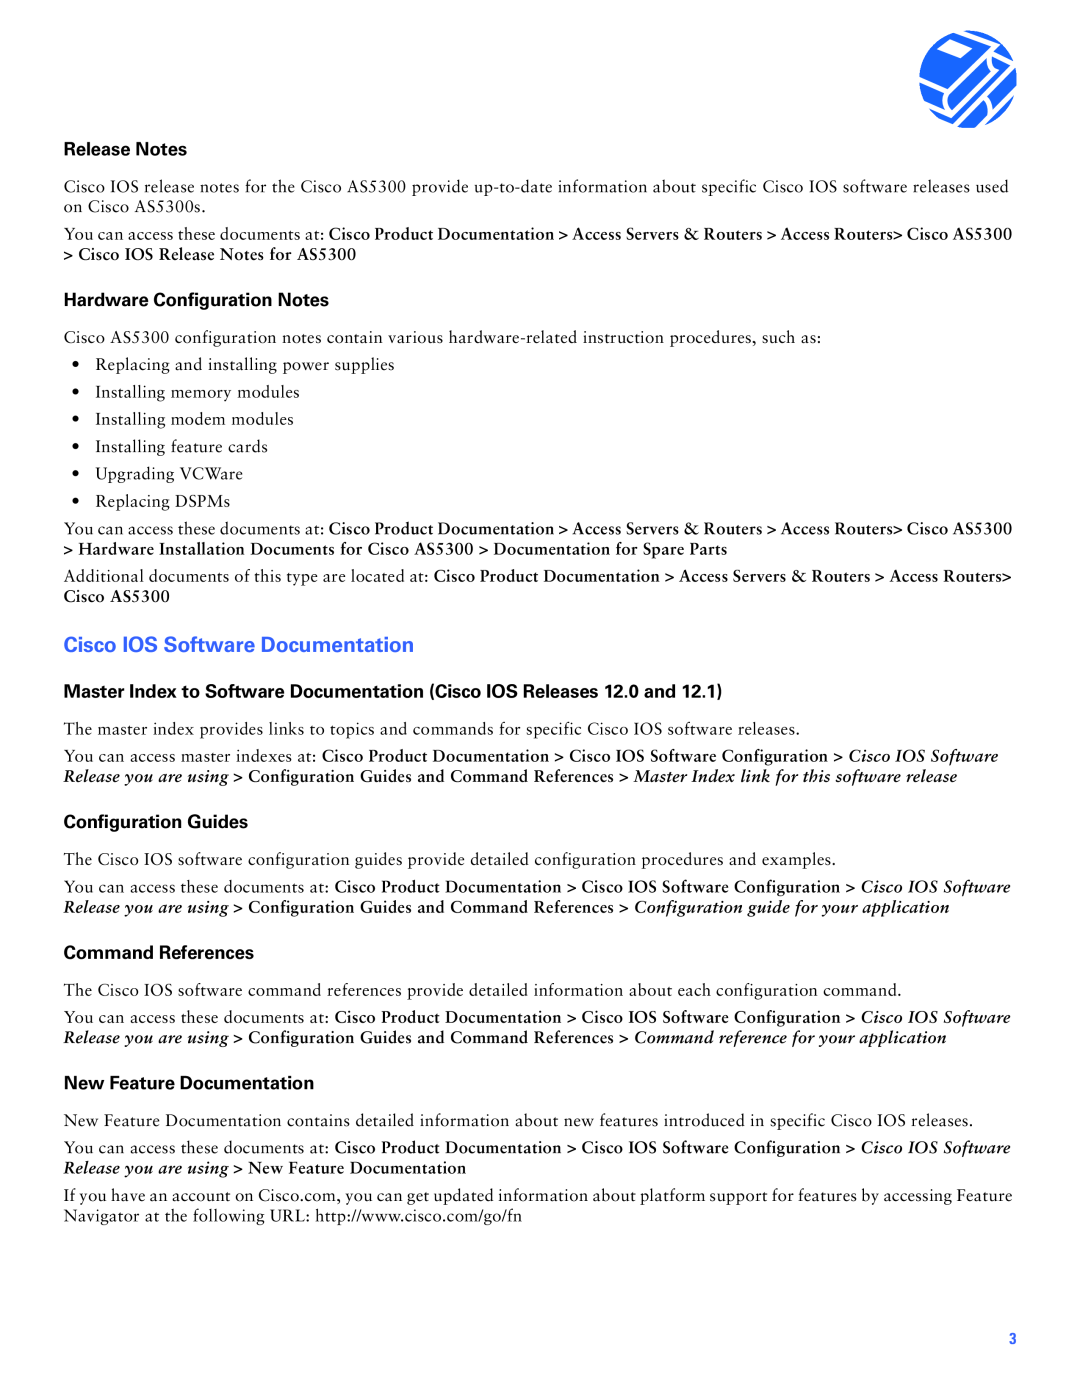 Cisco Systems Cisco AS5300 manual Cisco IOS Software Documentation, Release Notes, Hardware Configuration Notes 